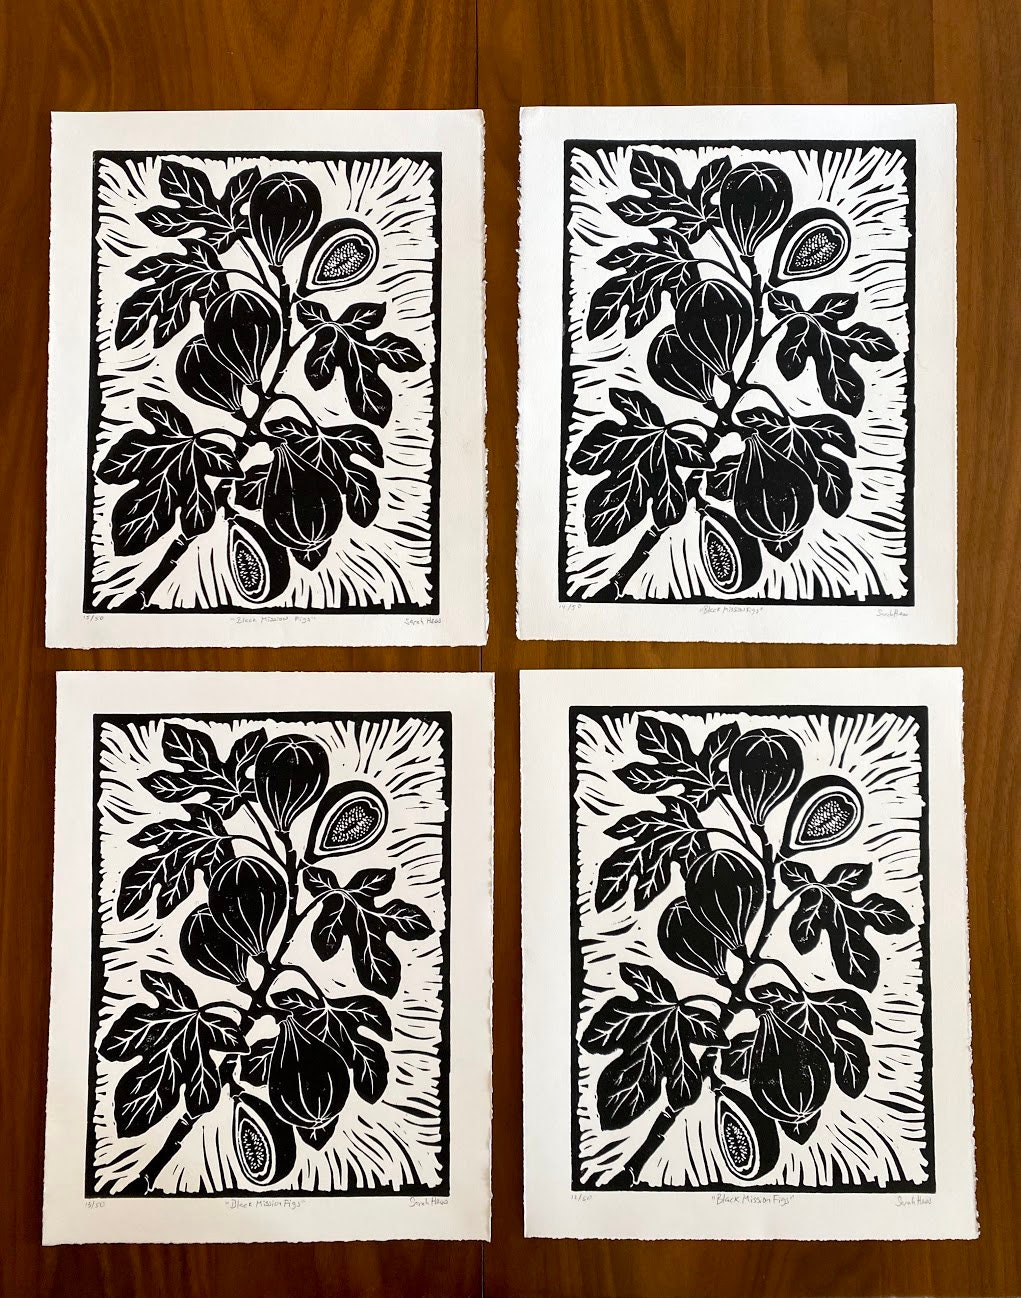 Figs Block Print Black and White Print Linocut Botanical Print 